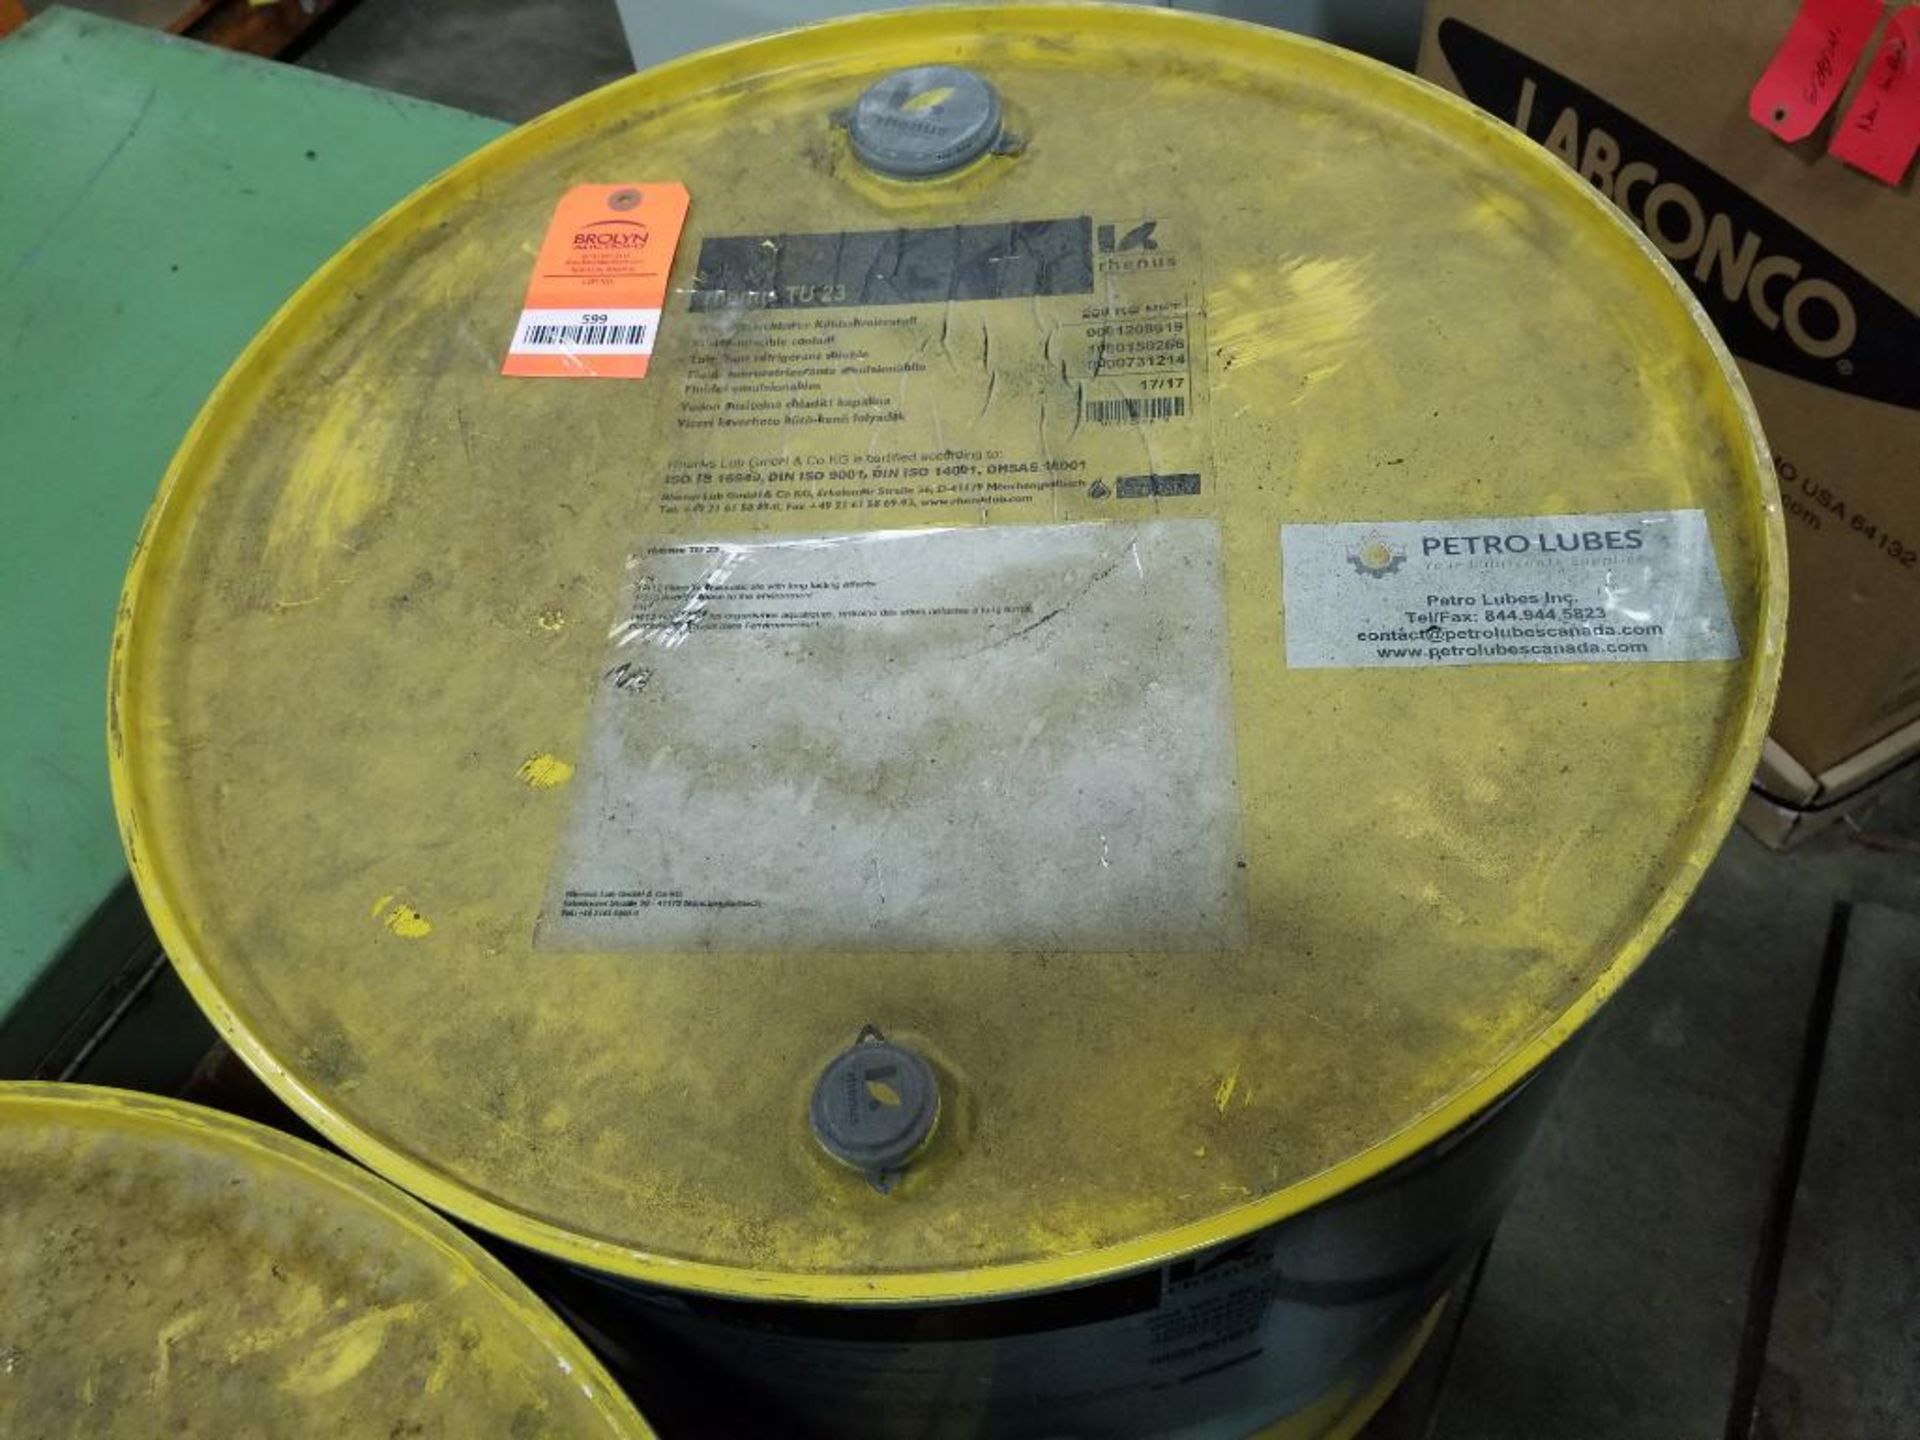 55 gallon barrel of Rhenus TU 23 metalworking coolant. New sealed container. - Image 2 of 4